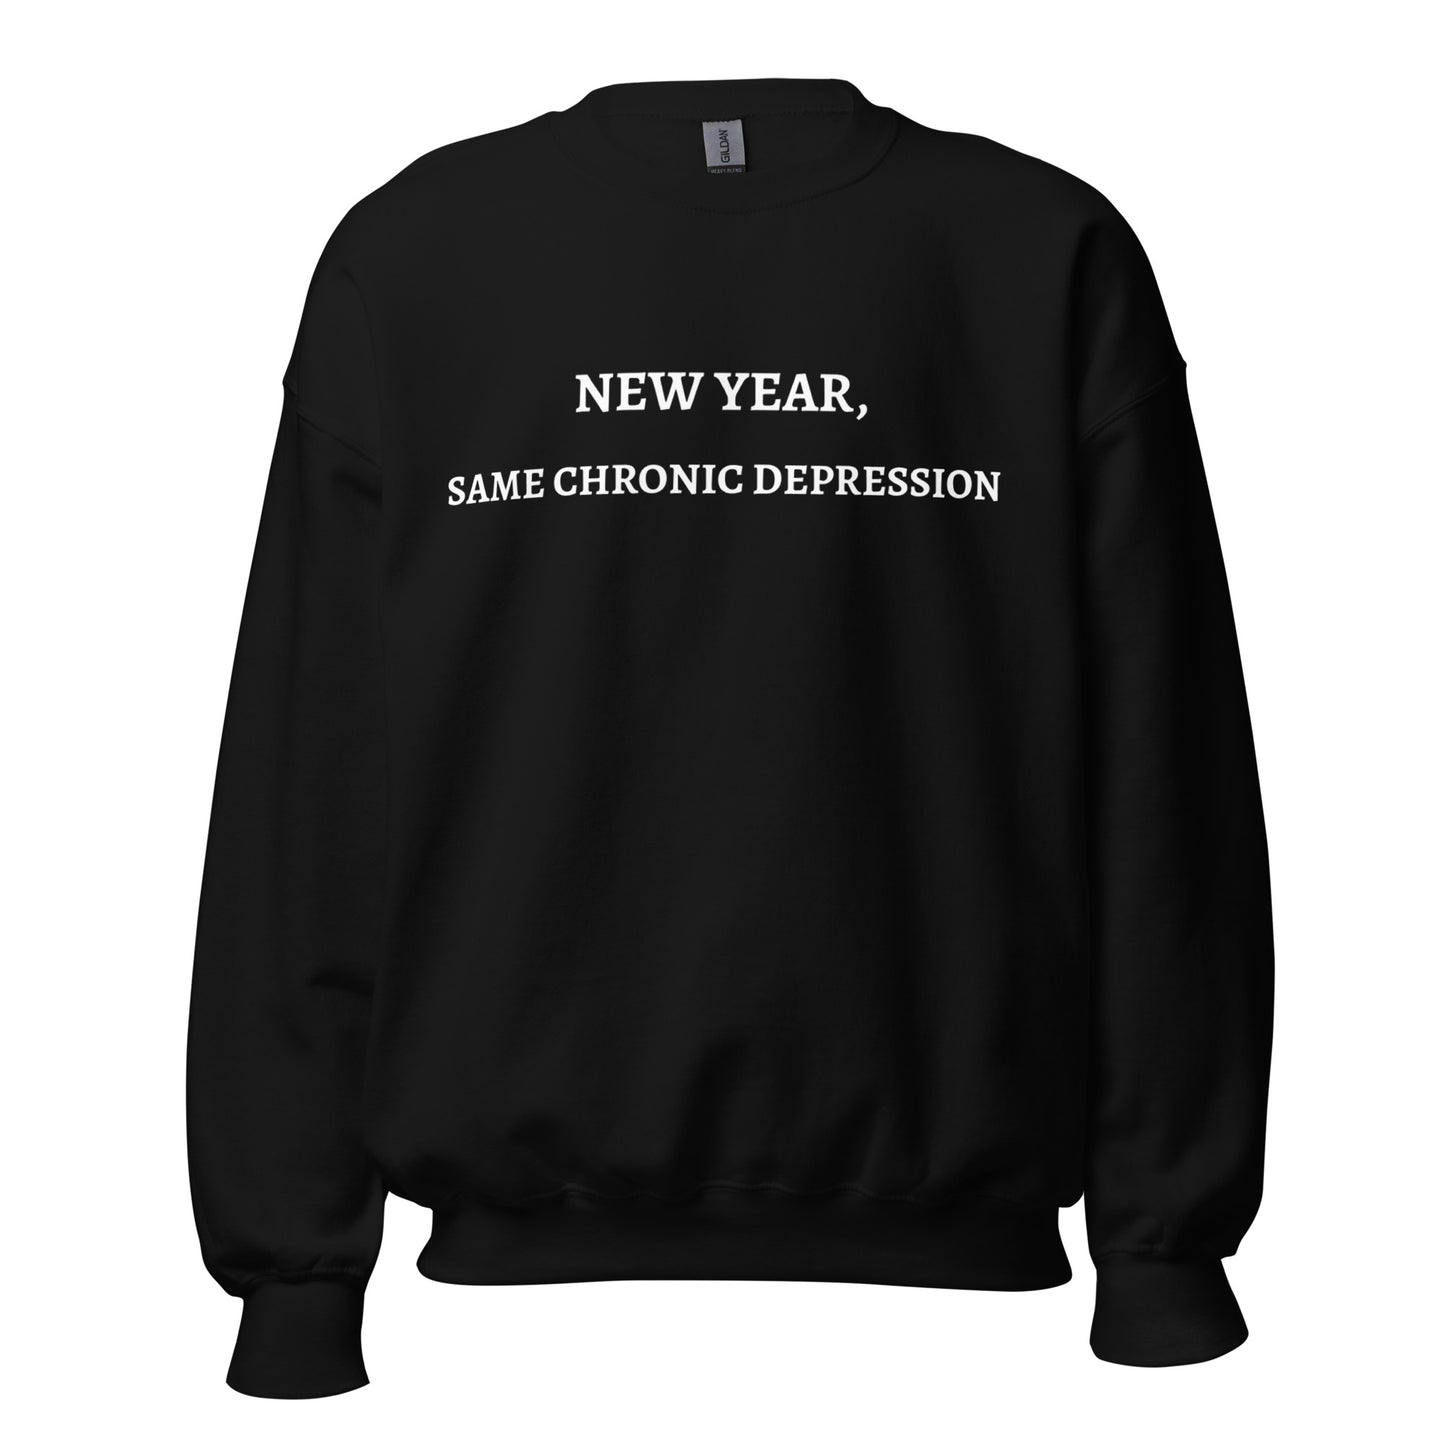 NEW YEAR, SAME CHRONIC DEPRESSION